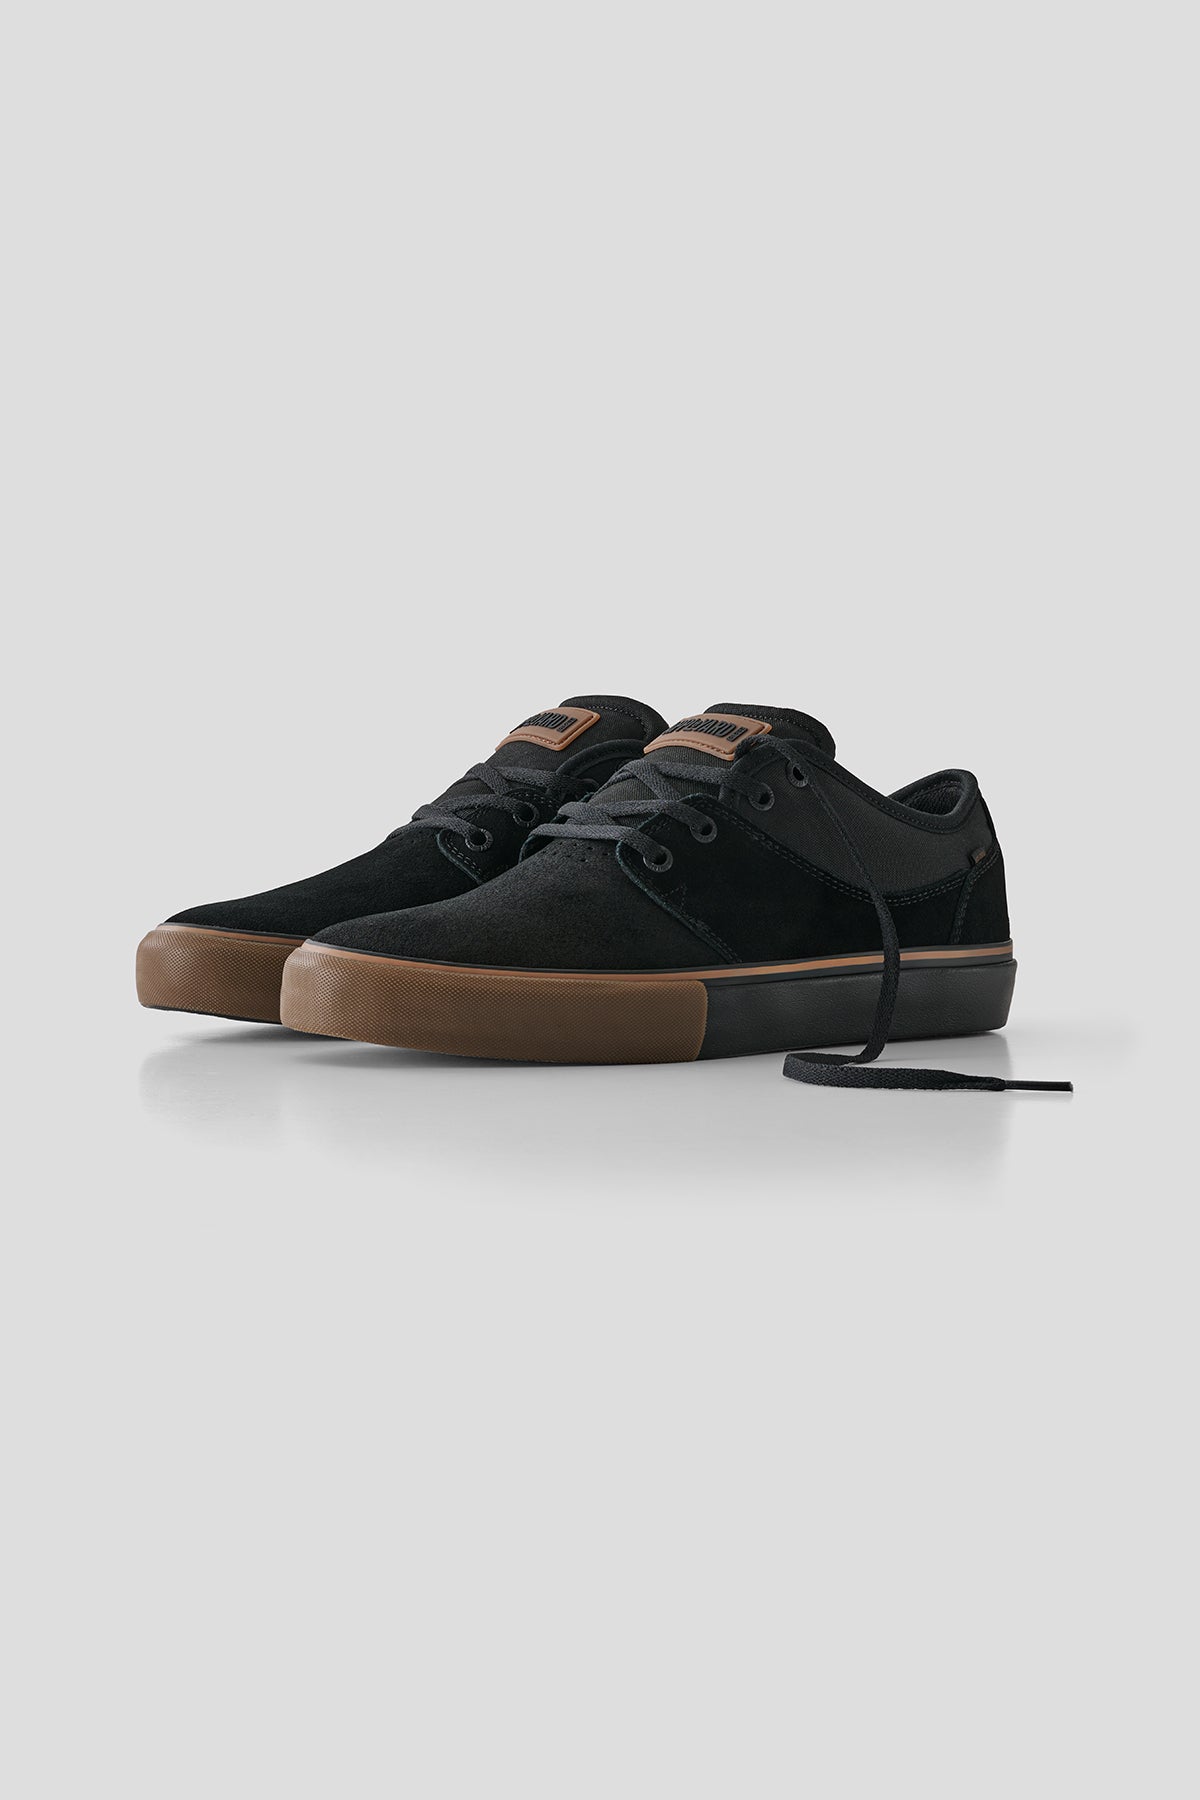 Mahalo - Black/Gum - Skate Shoes